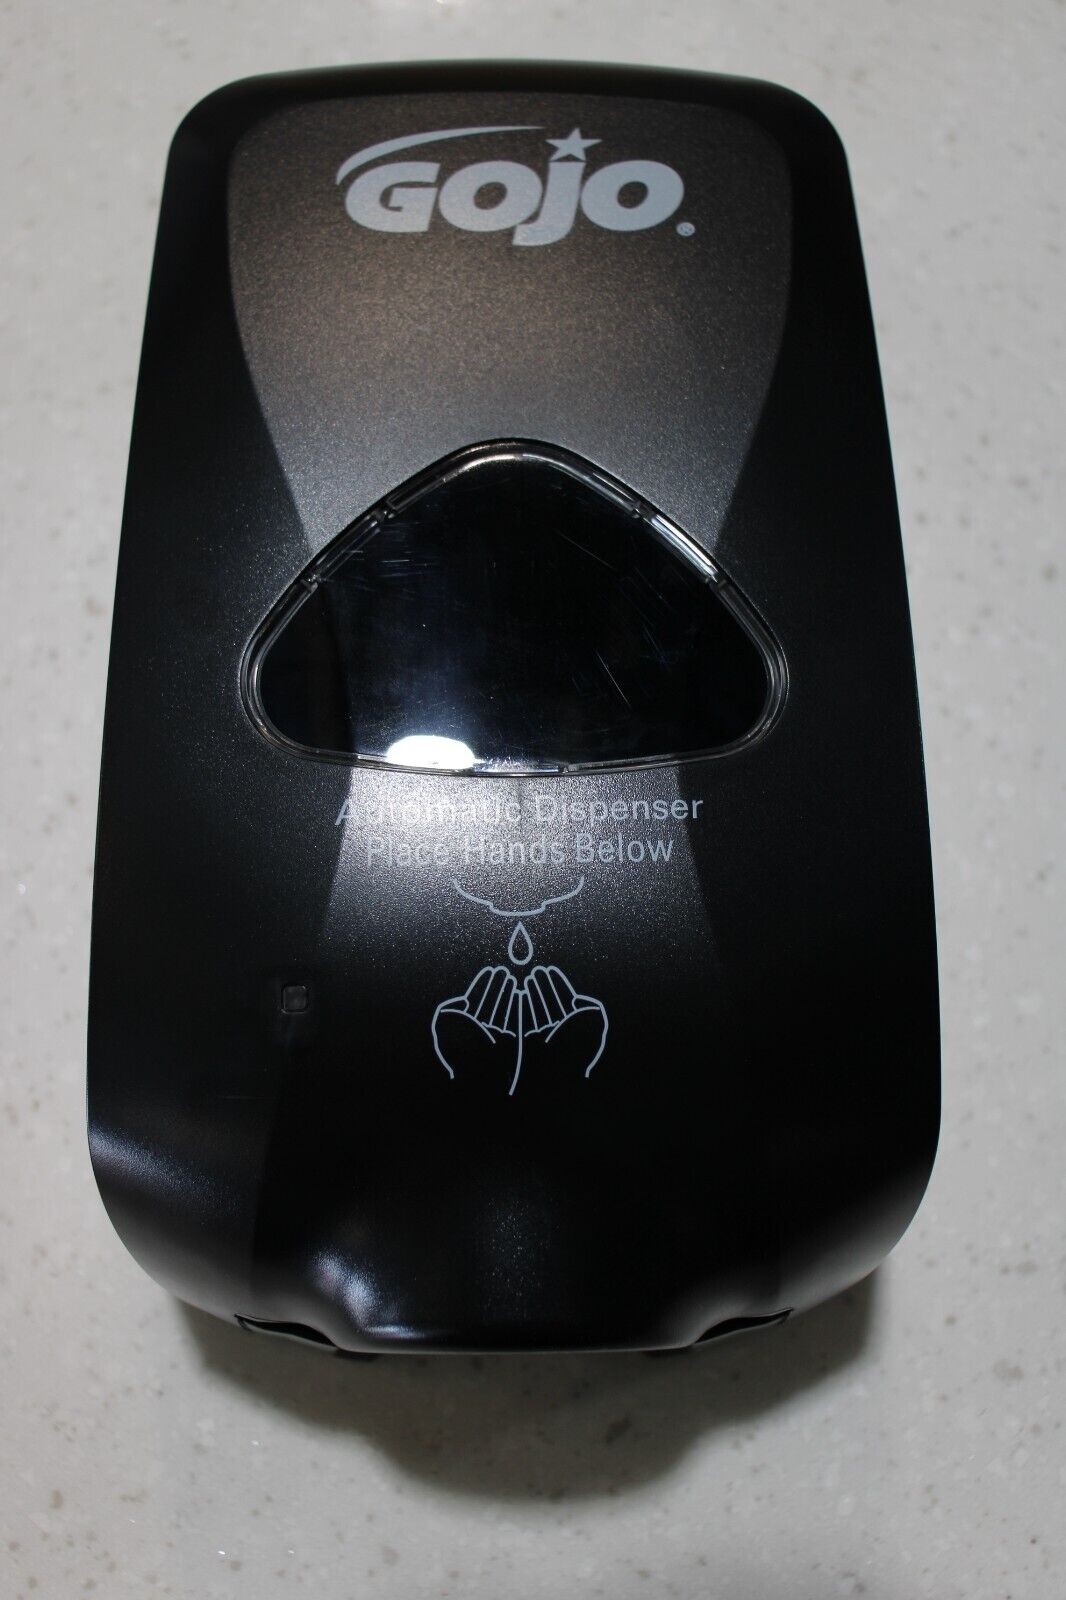 GOJO TFX Touch Free Dispenser 2730-01 BLACK